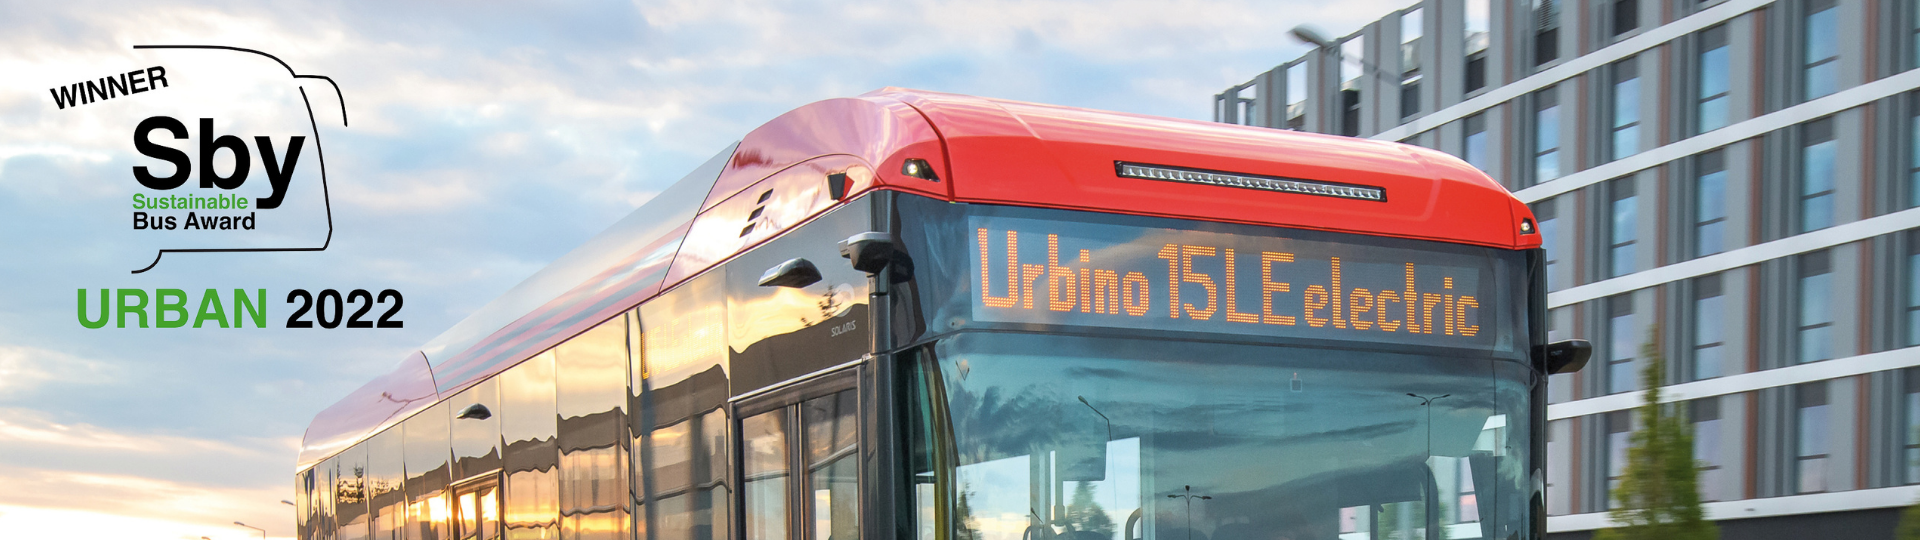 Solaris Urbino 15 LE electric z prestiżową nagrodą Sustainable Bus Award